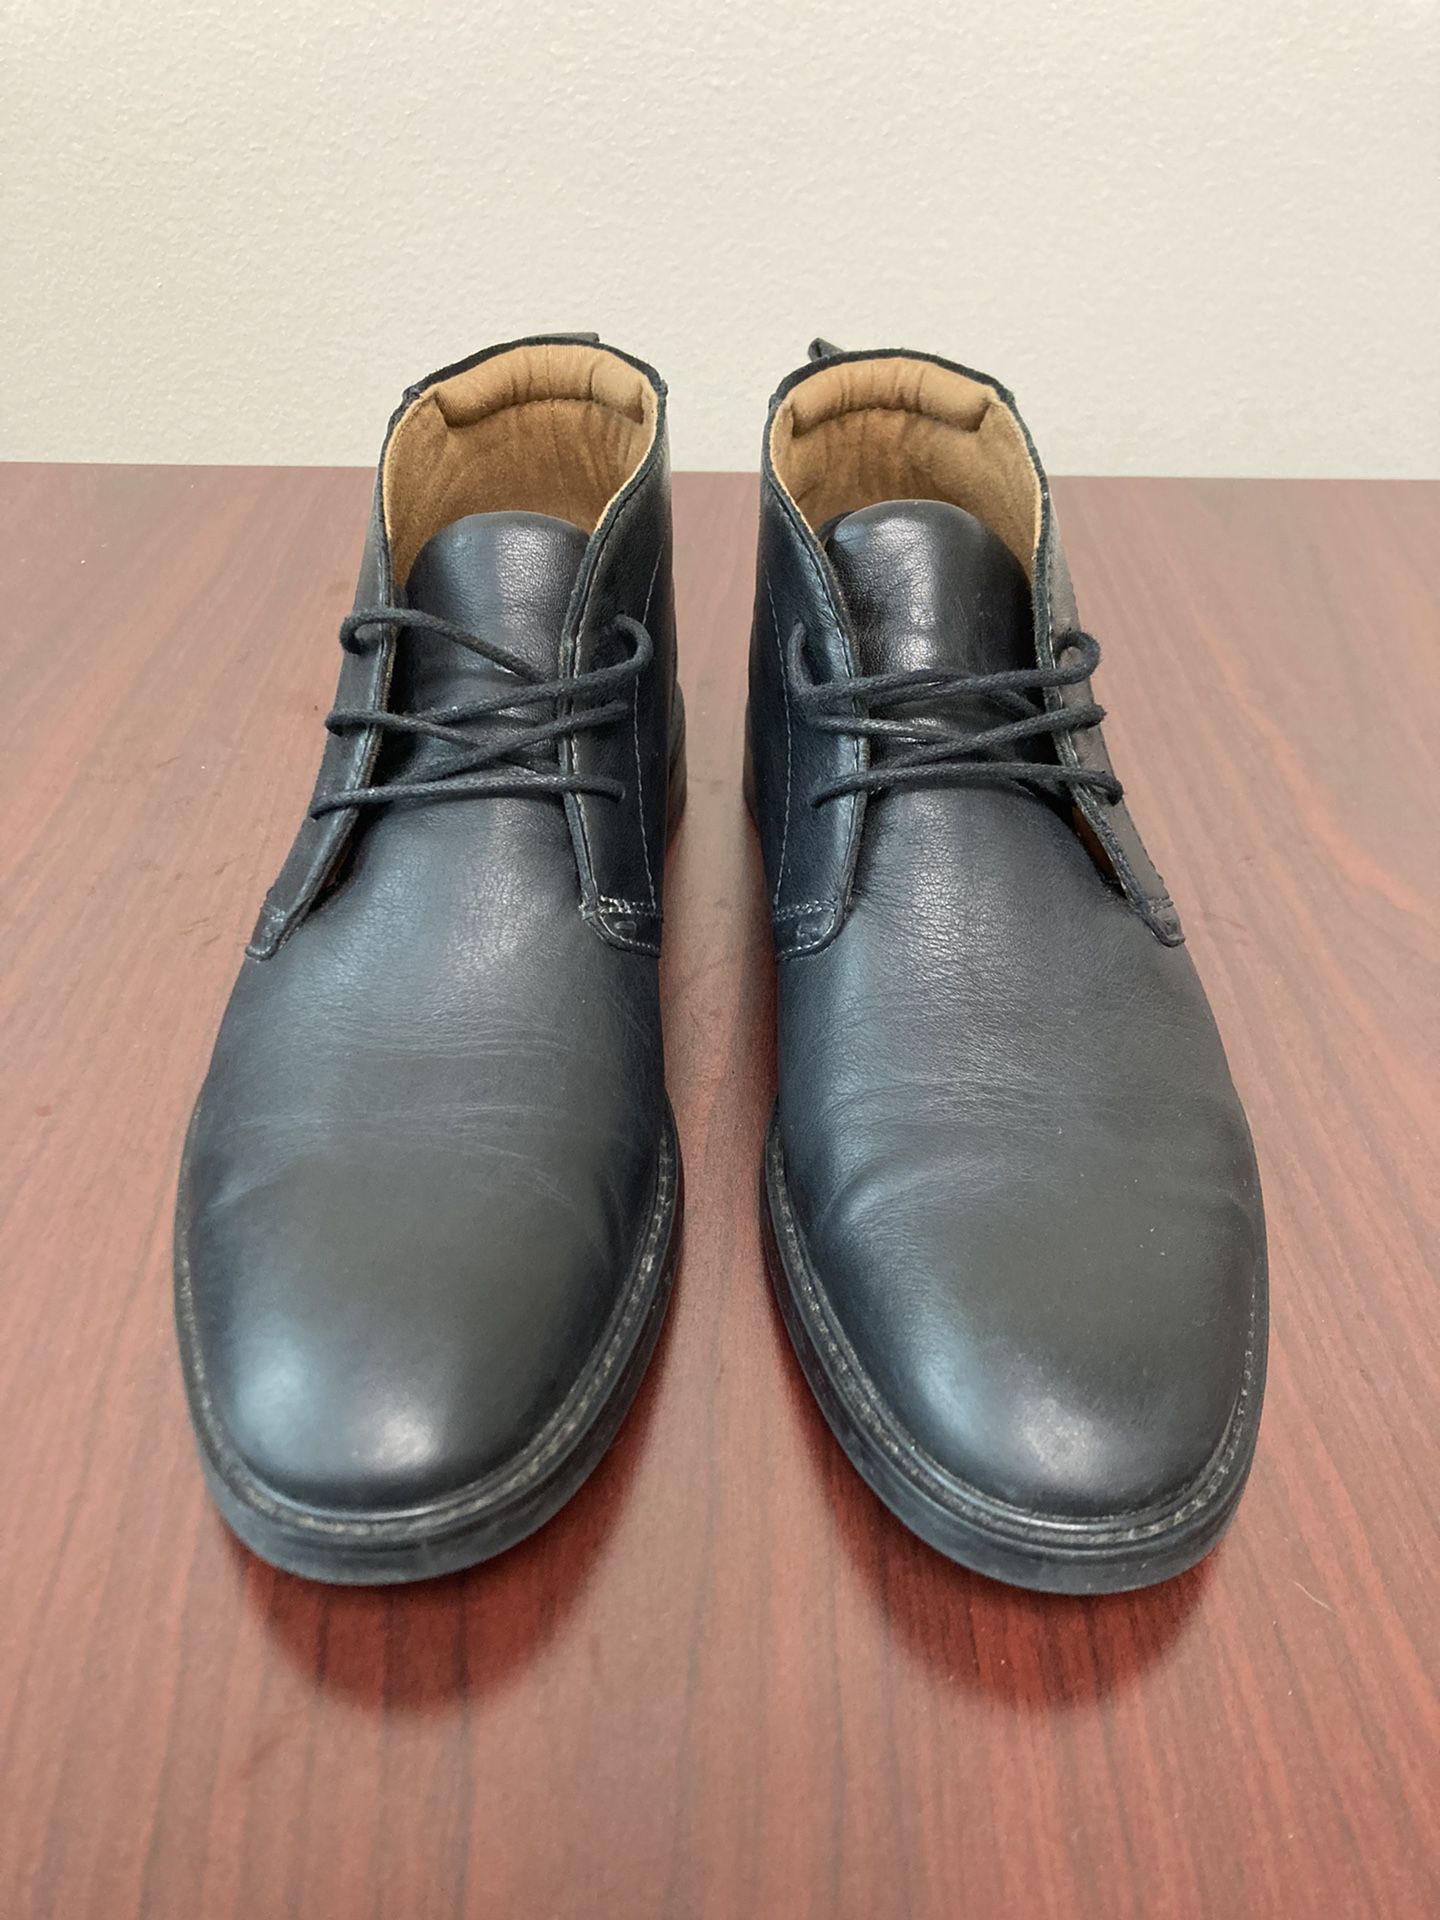 Aldo Black Chukka Boots - Size 8